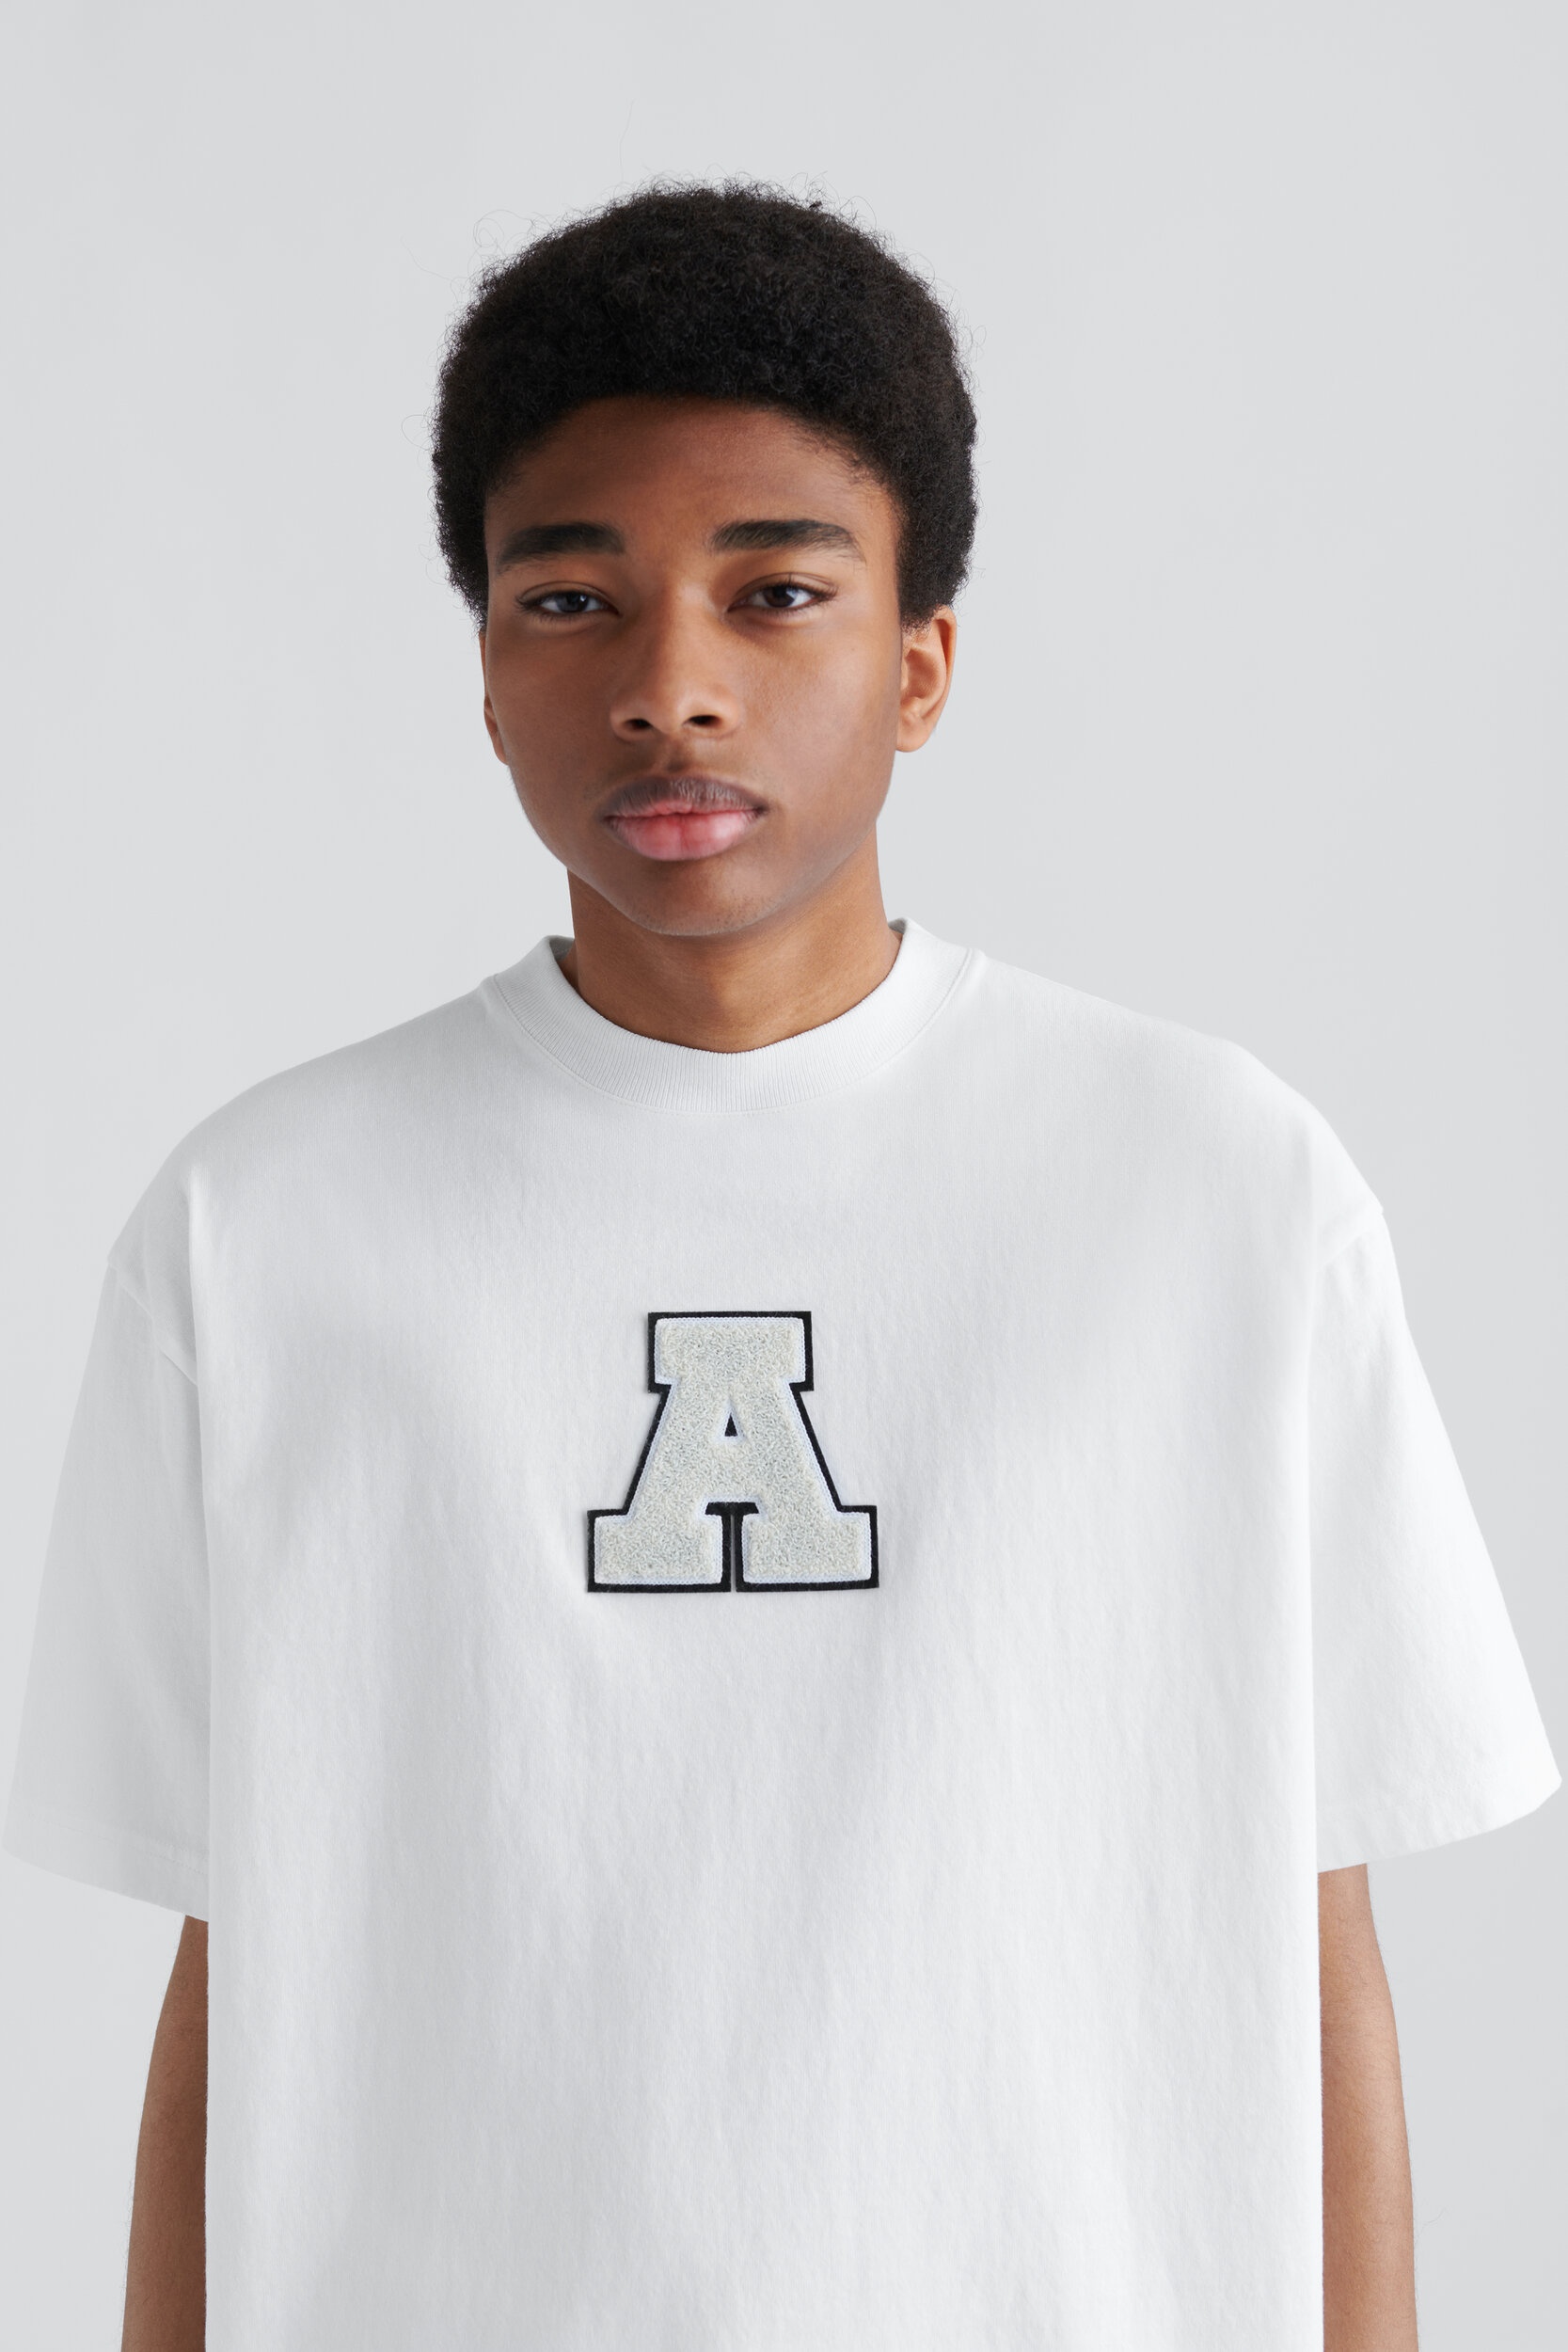 College A T-Shirt - 5